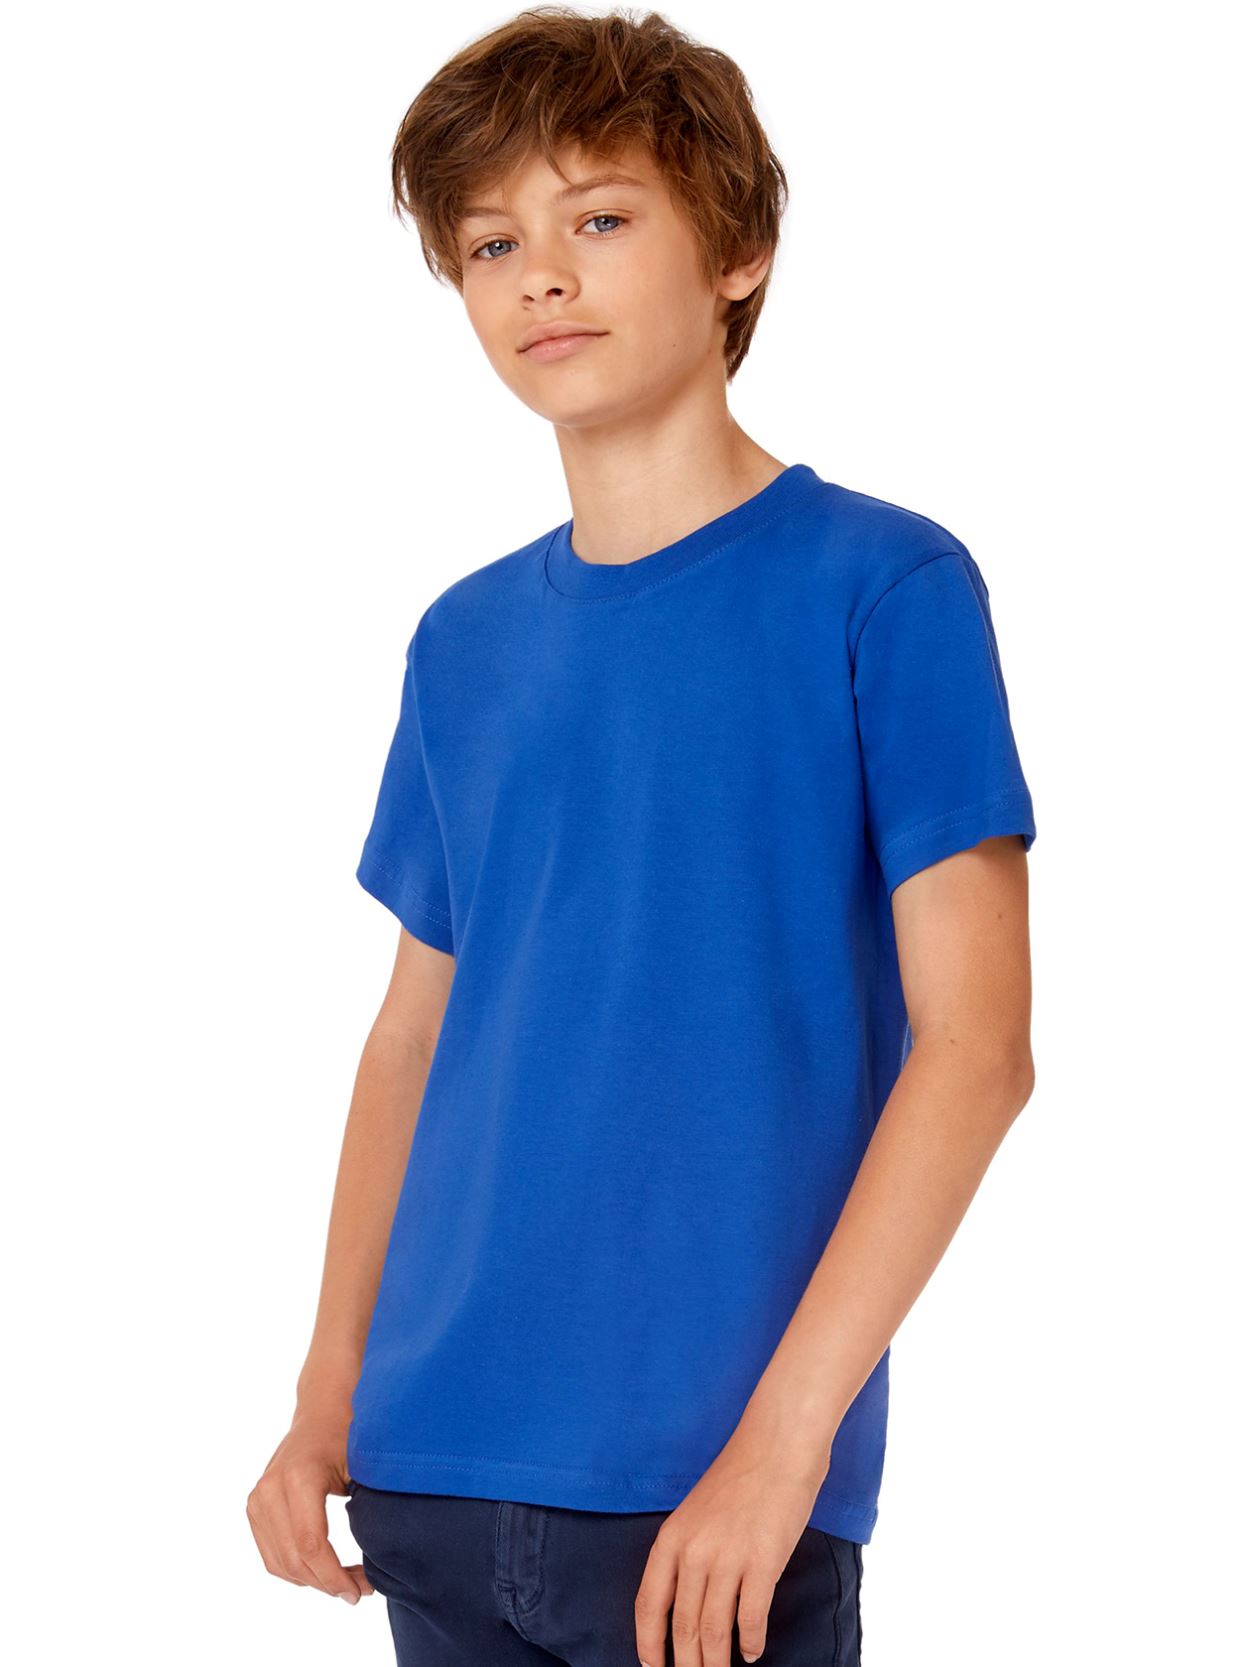 BA190B Kids Exact 190 T Shirt Image 1